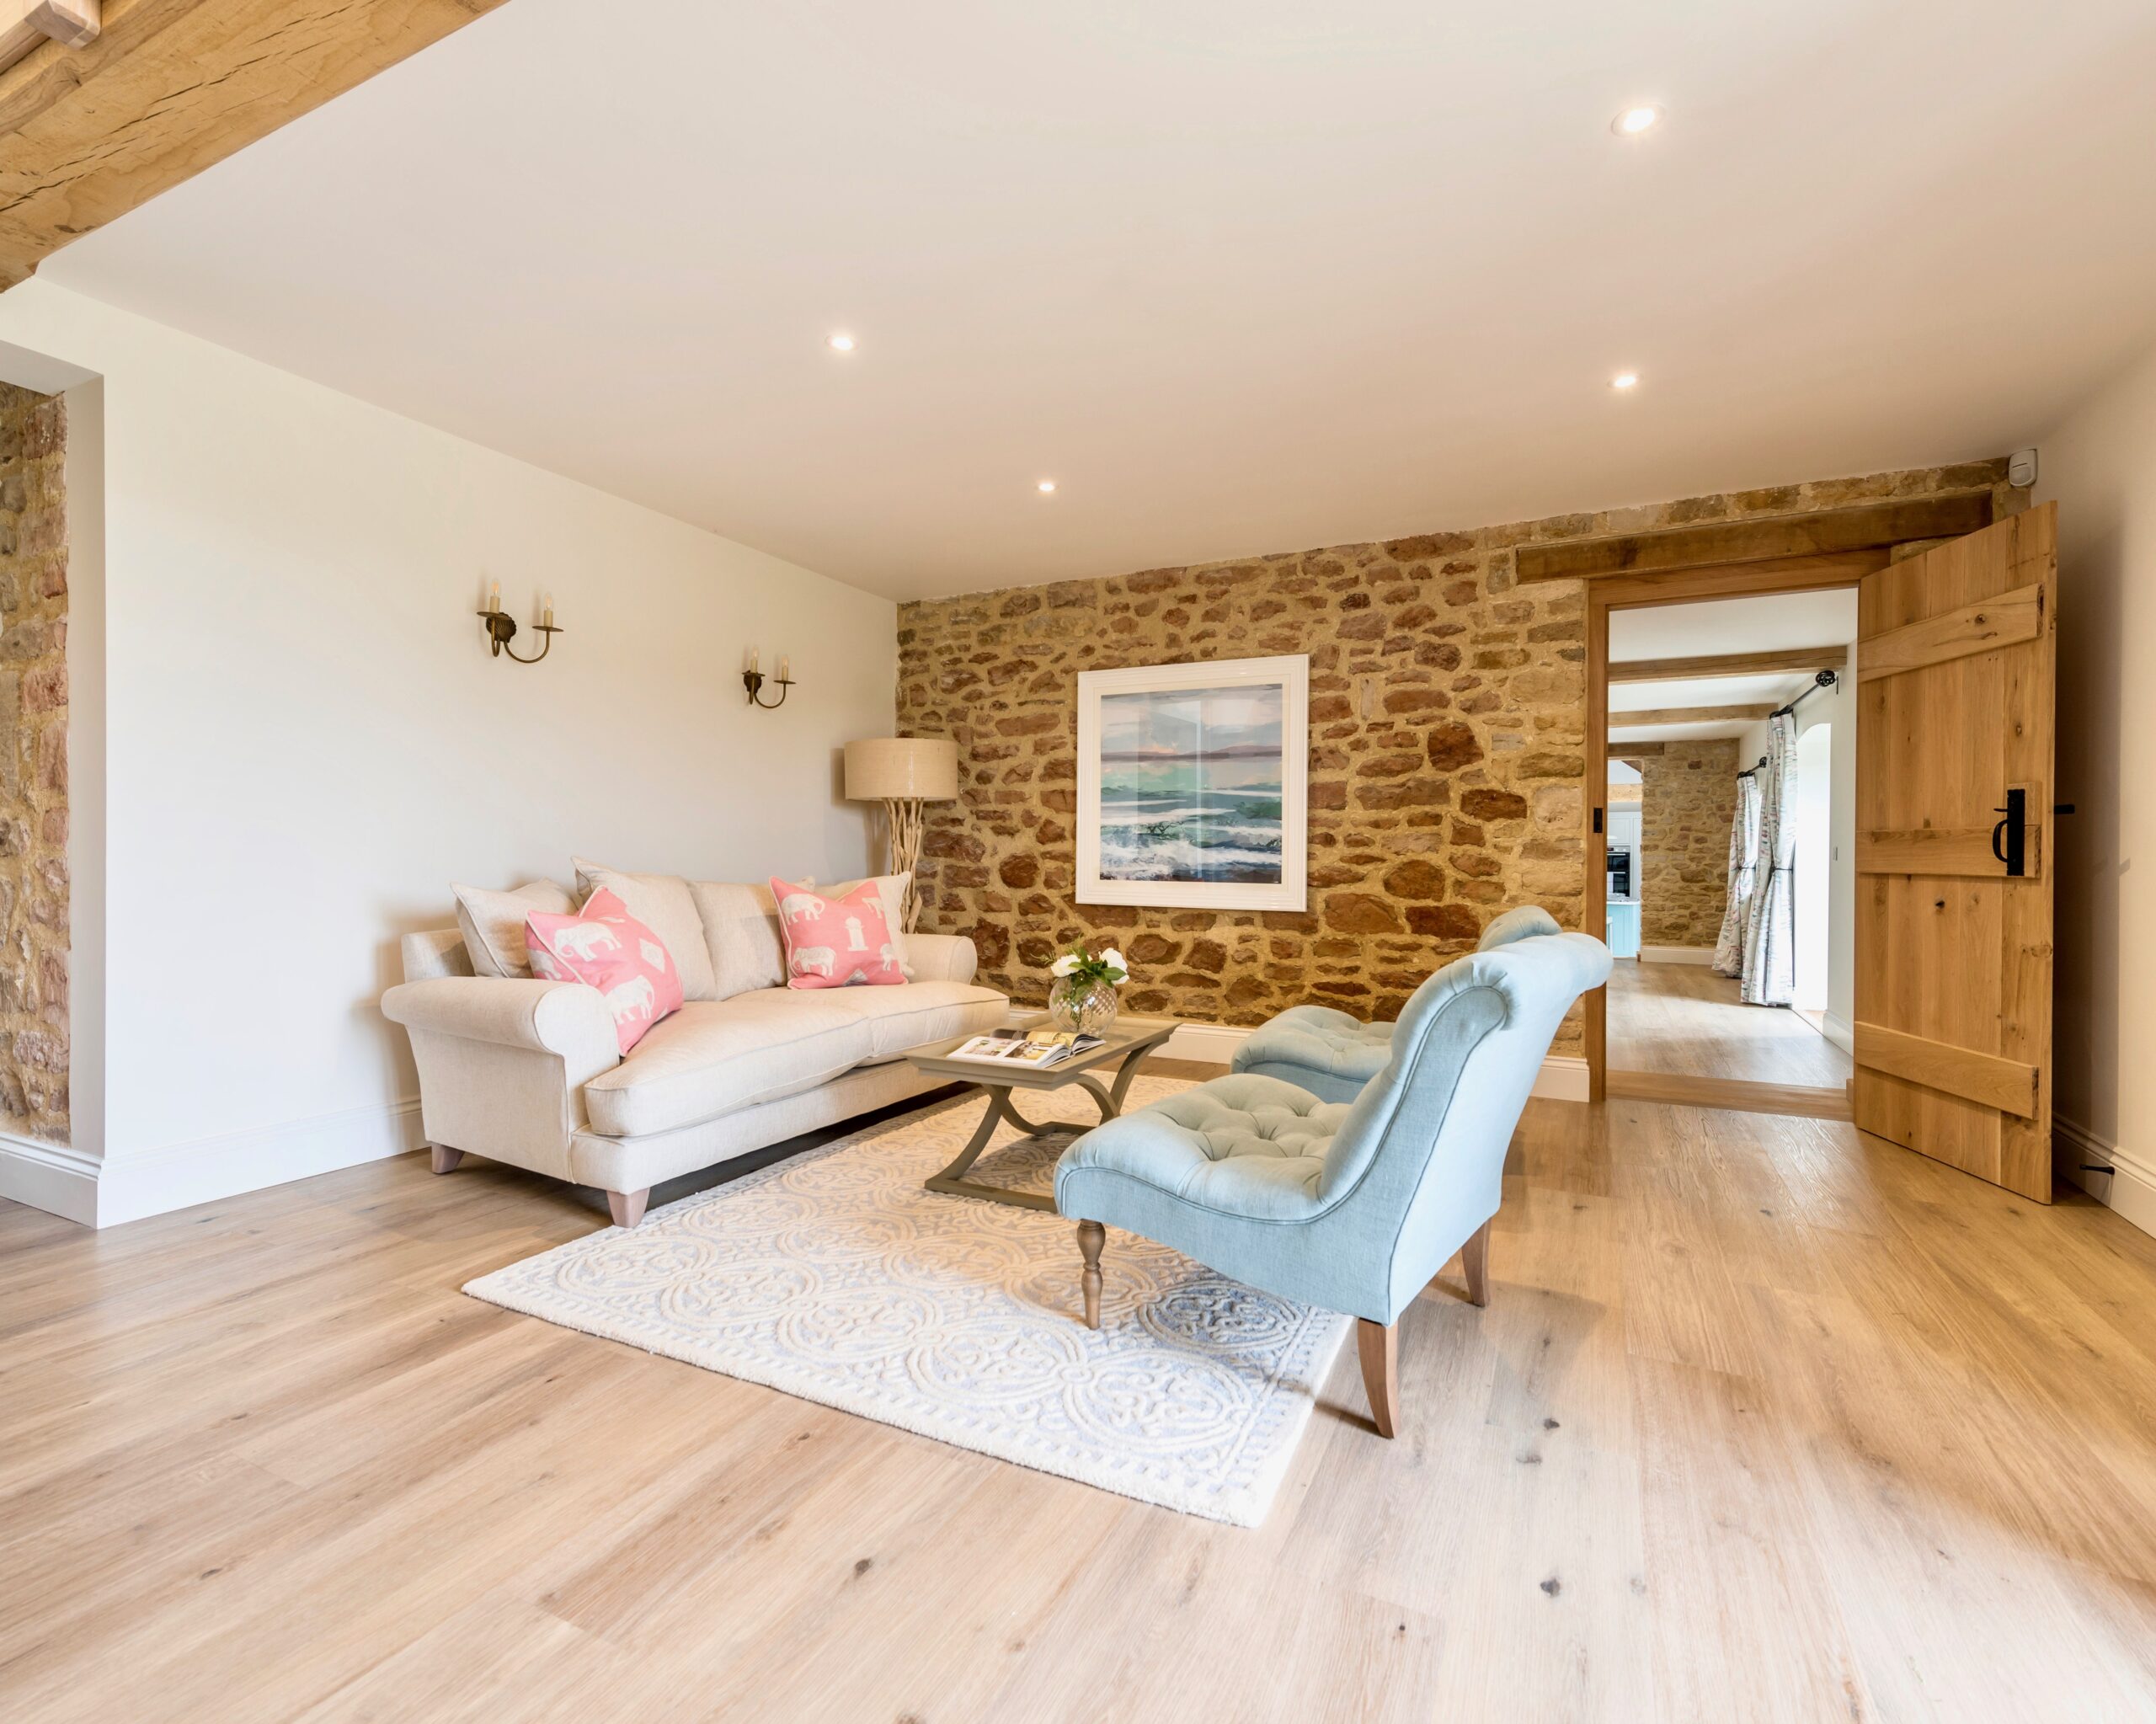 Dorset interior - Living room